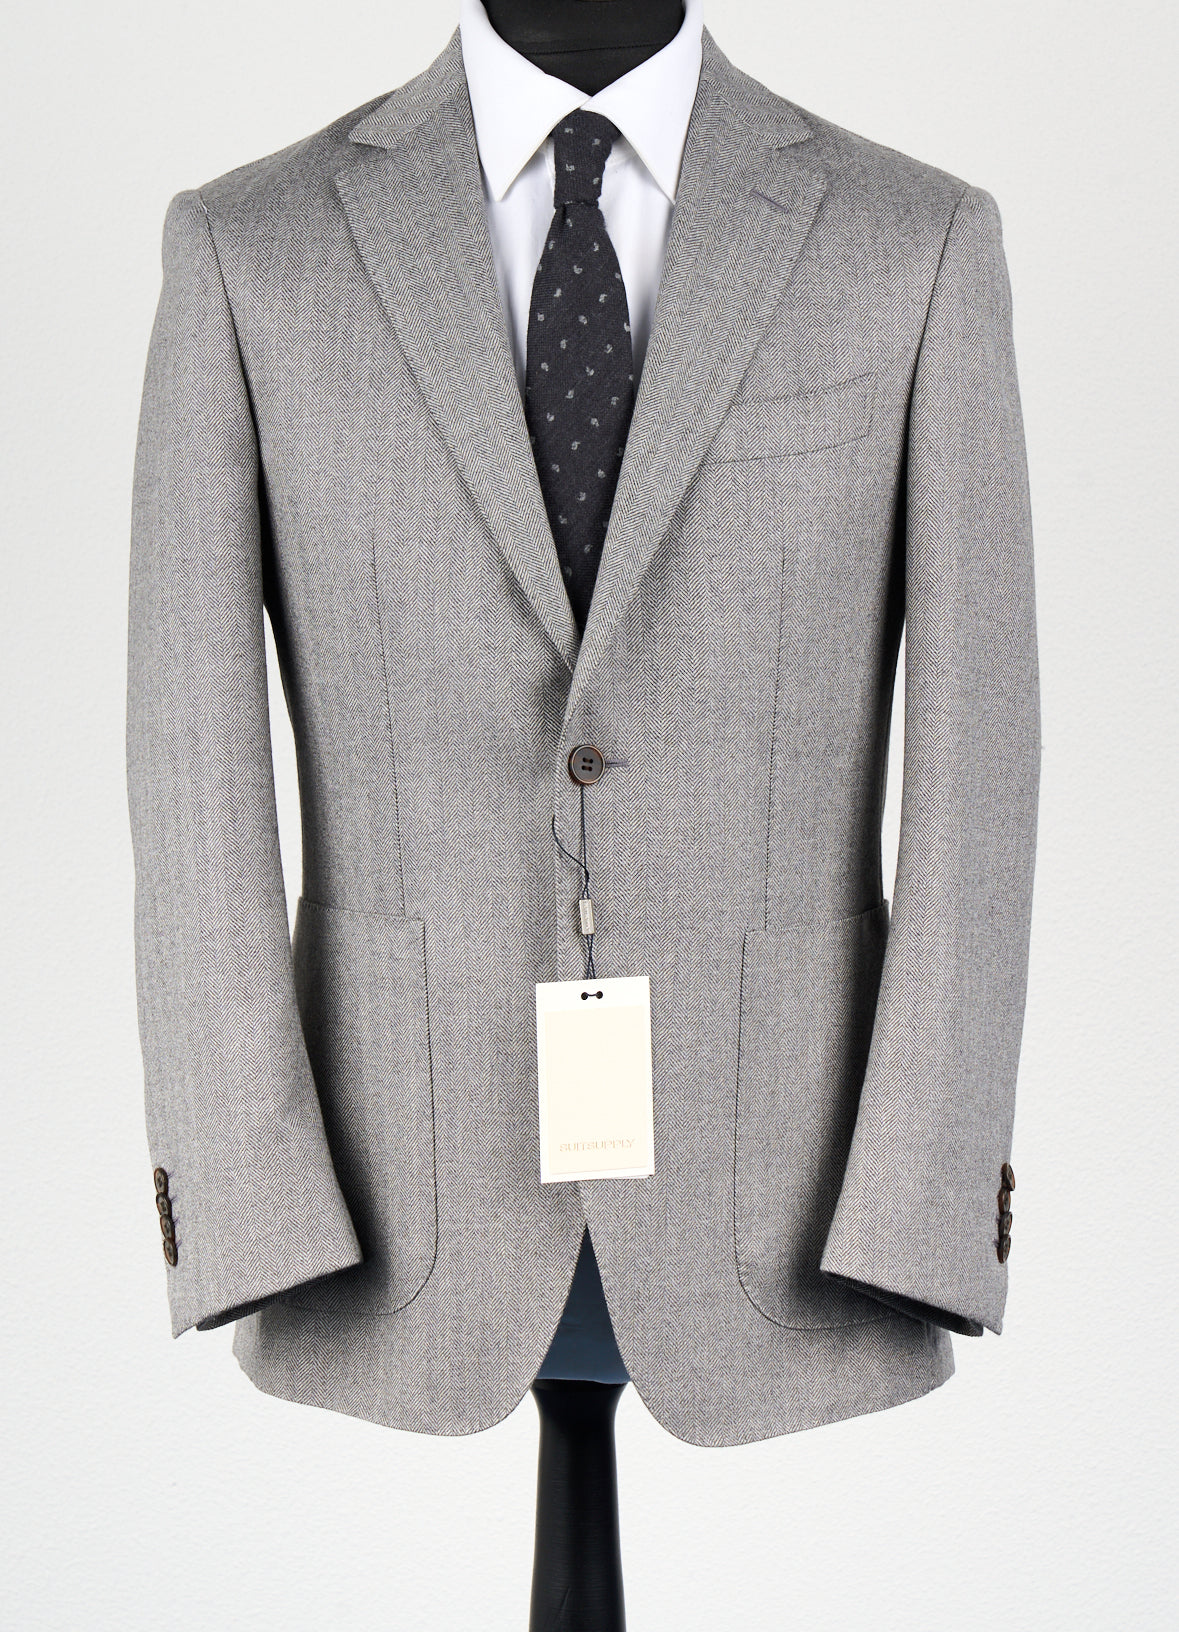 New Suitsupply Havana Gray Herringbone Pure Wool Half Lined Blazer - Size 36S and 38S